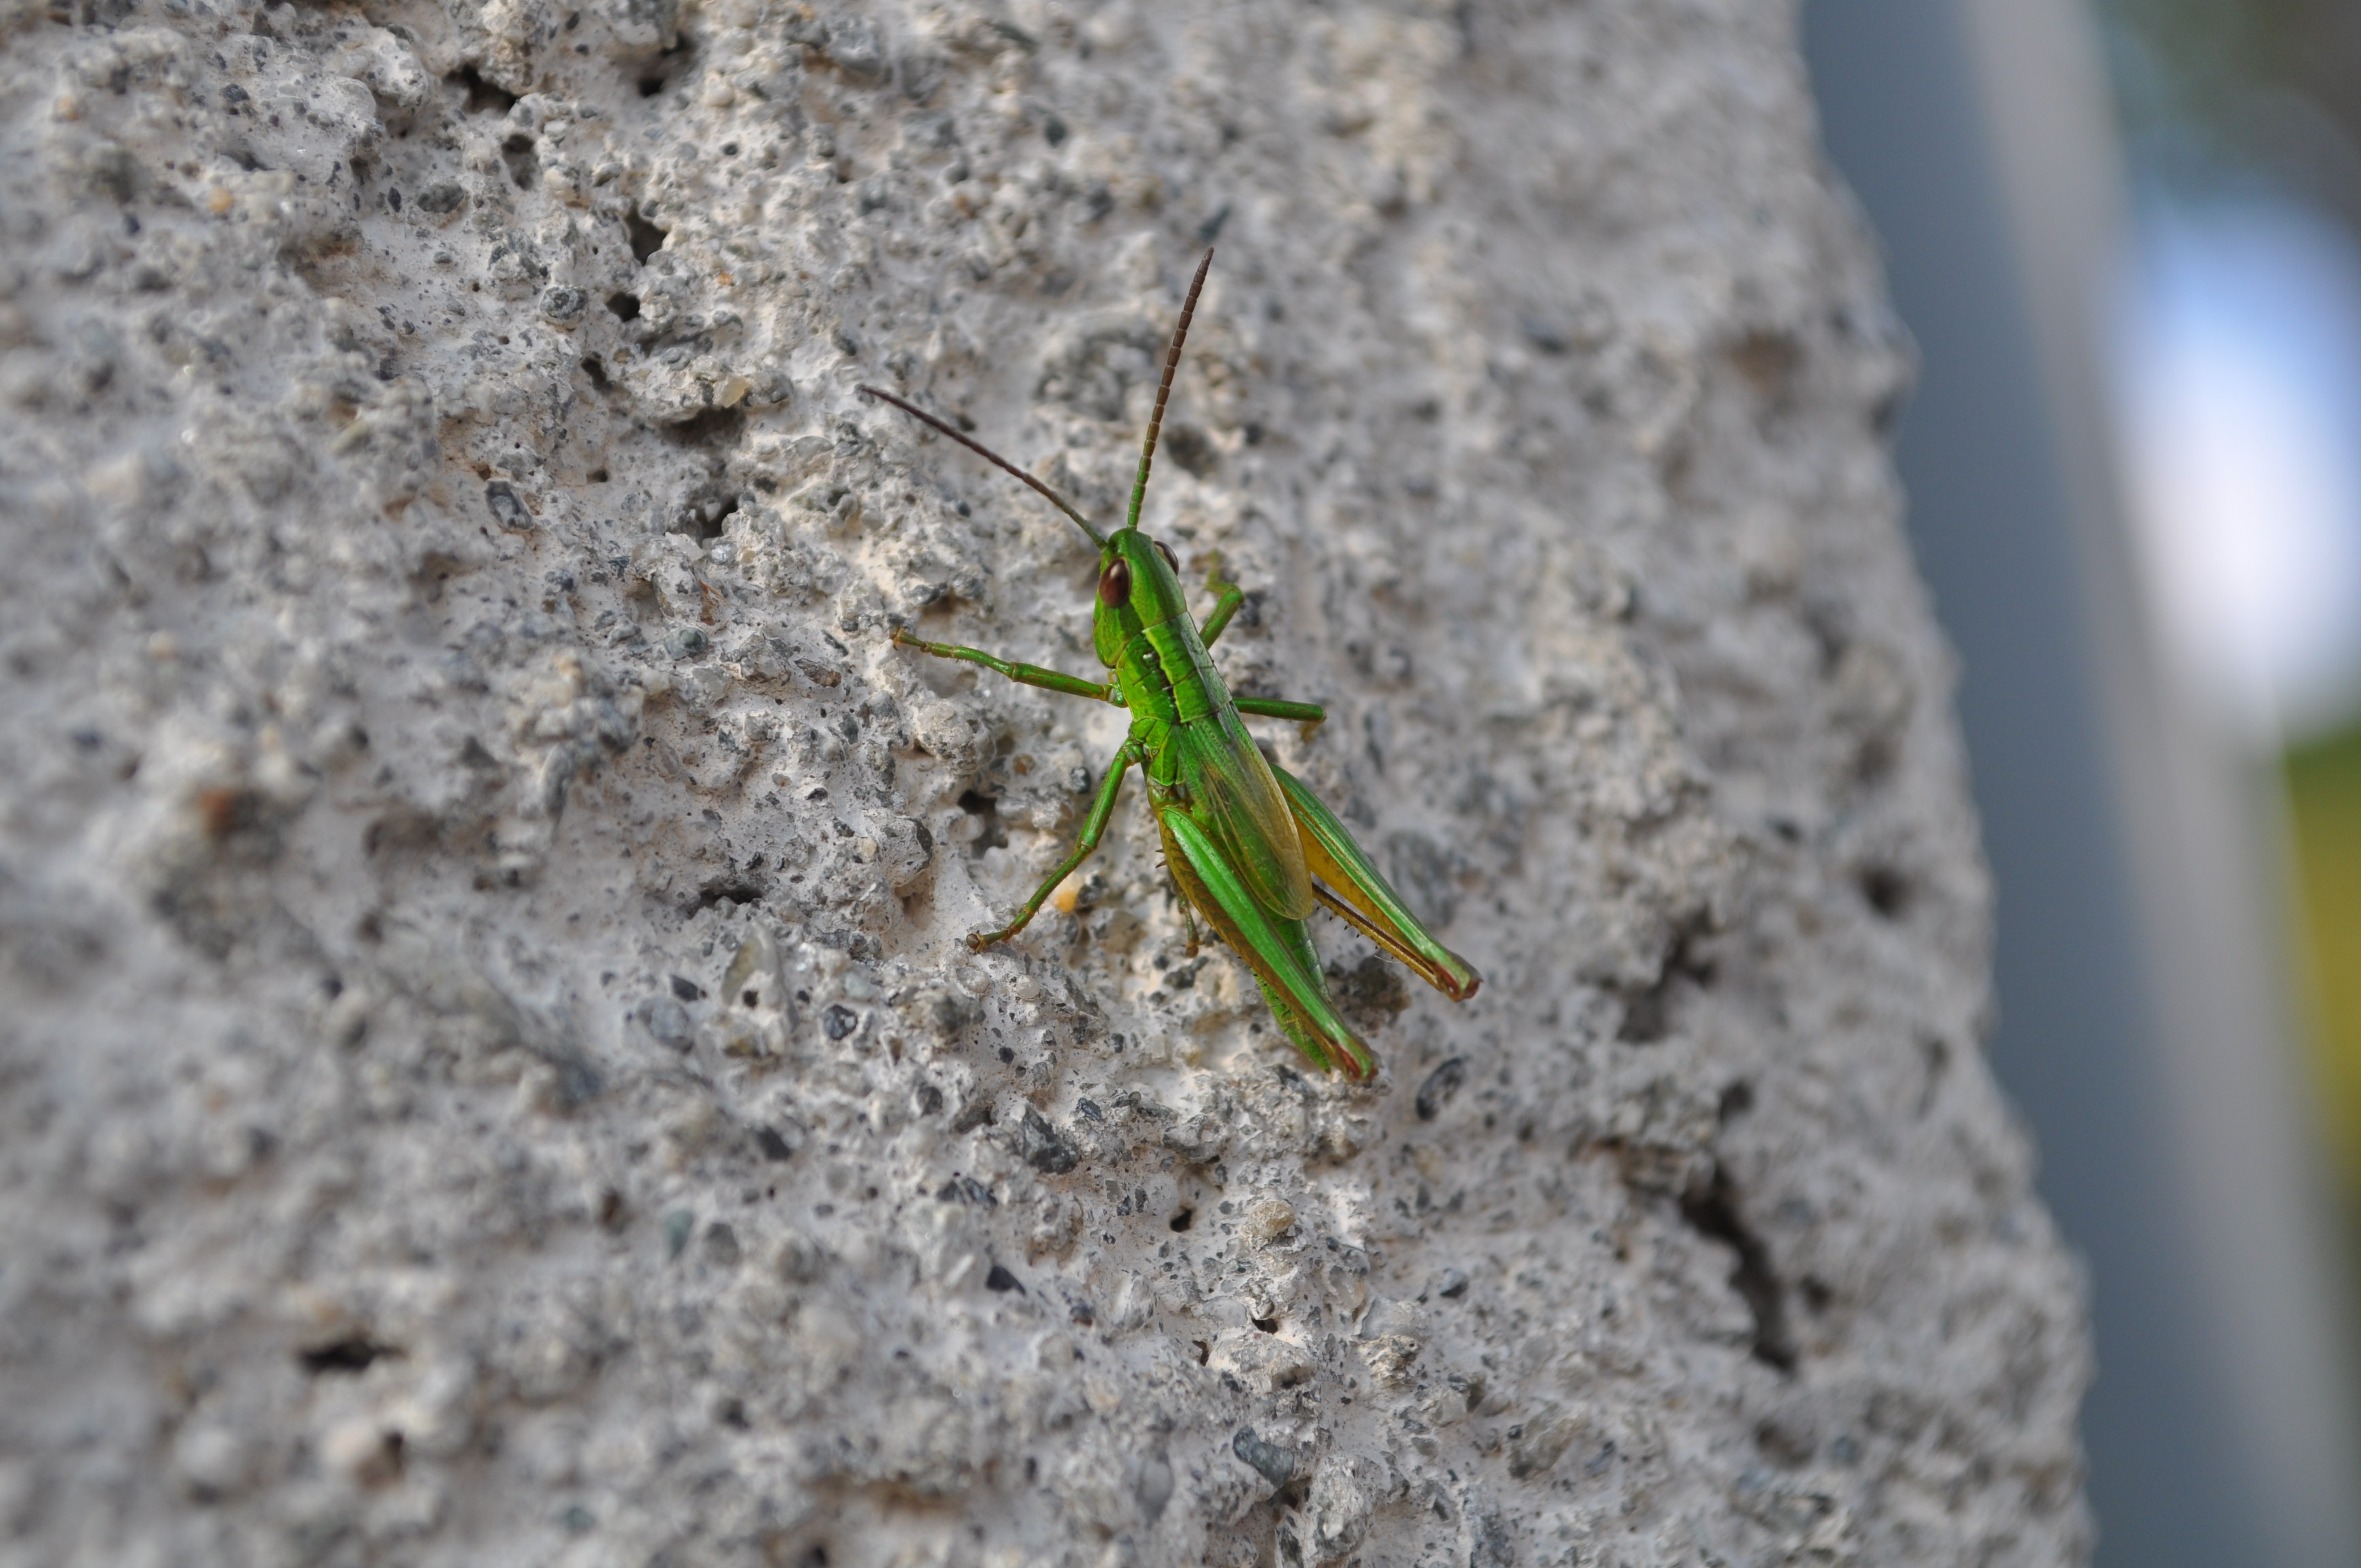 green, insects, depth of field, grasshopper - desktop wallpaper